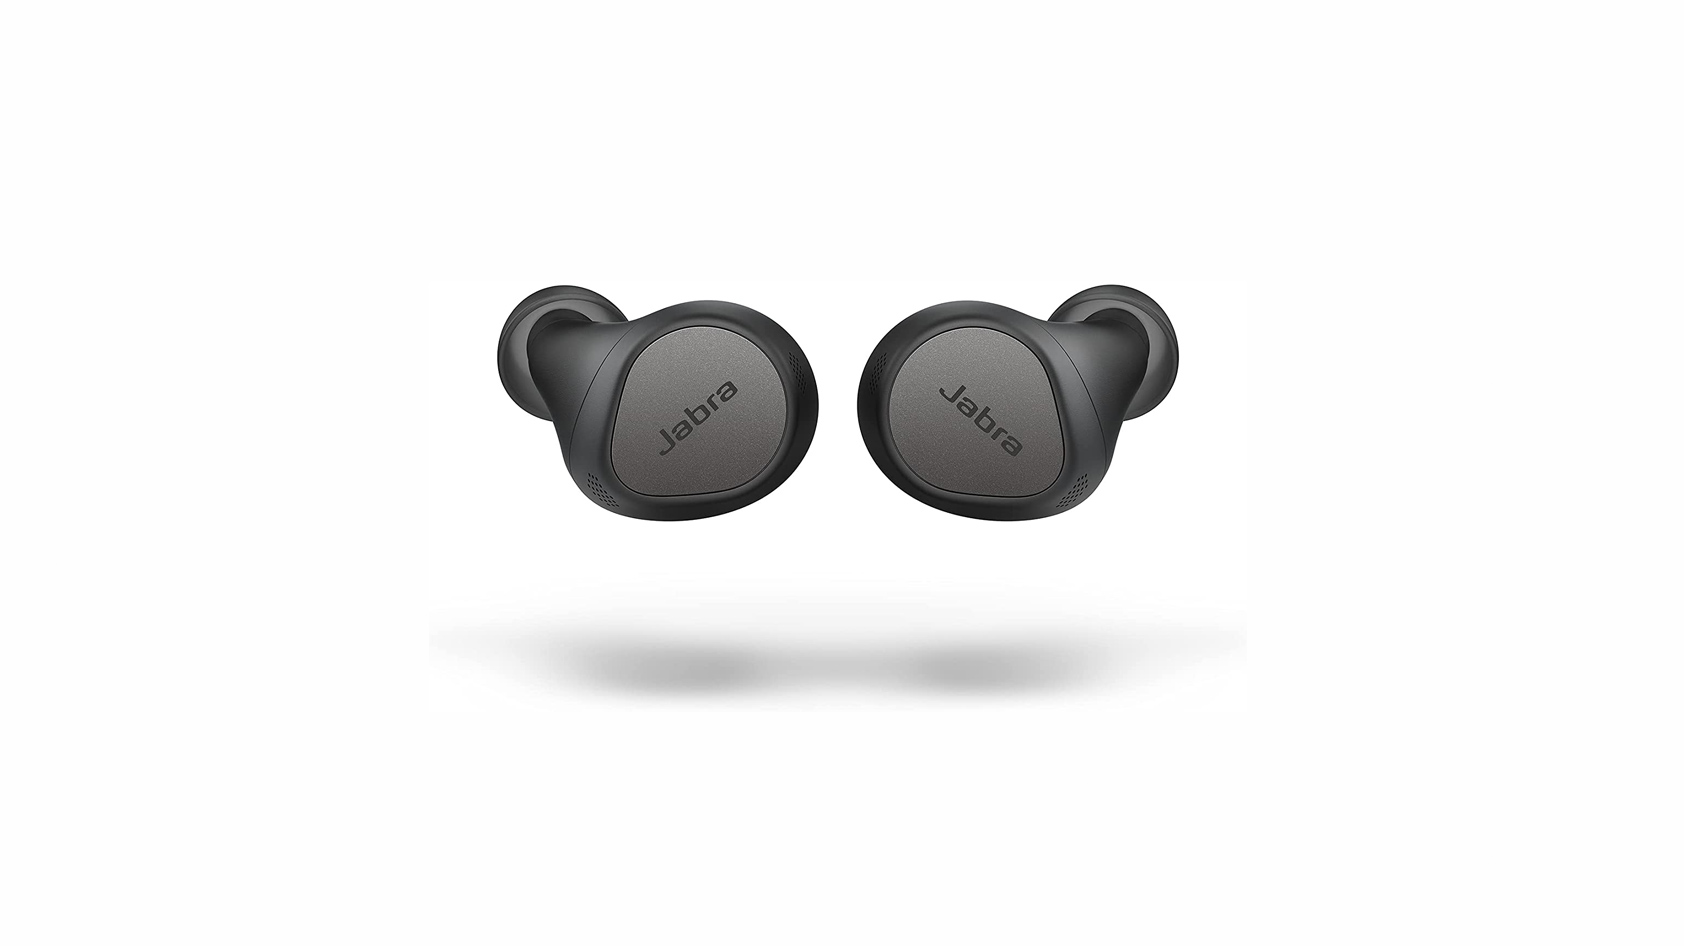 The Jabra Elite 7 Pro true wireless earbuds in titanium black.